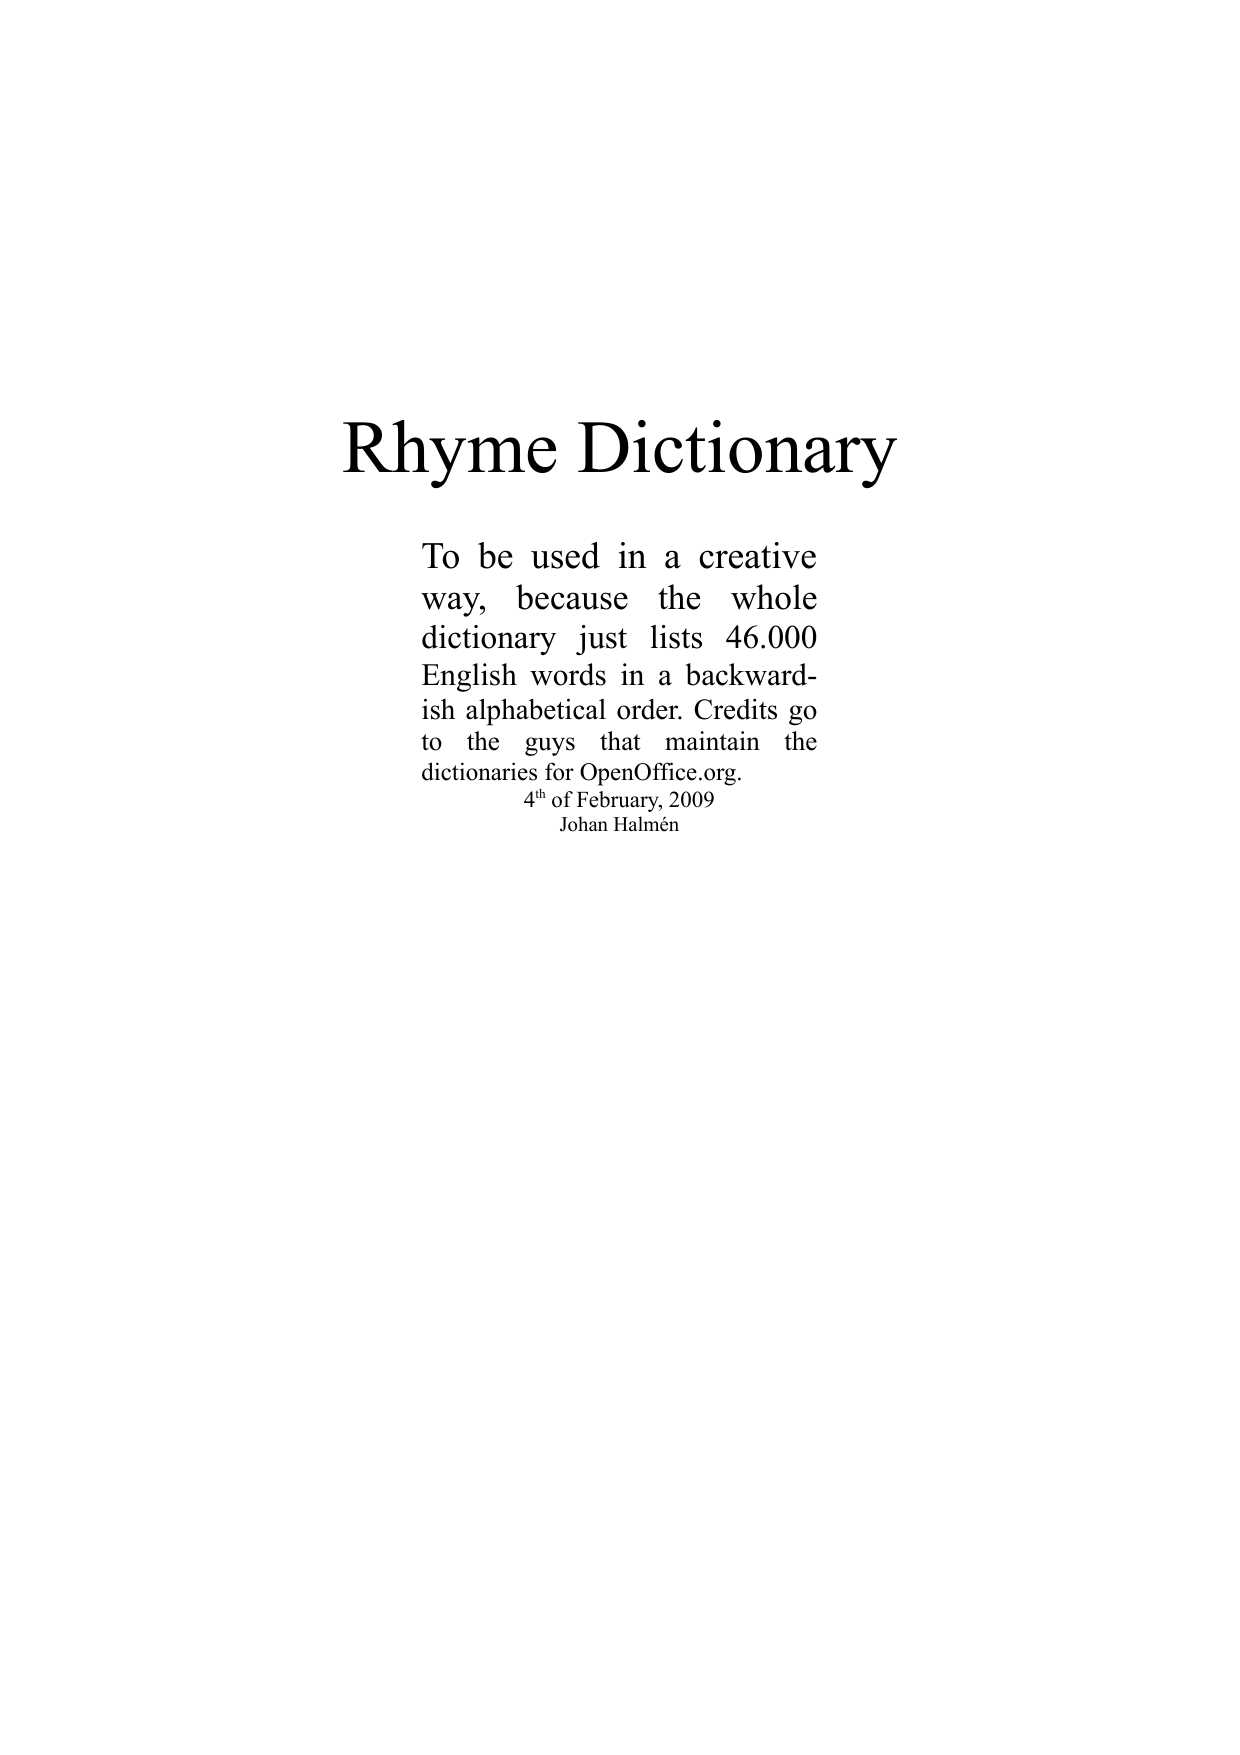 Core Belief Worksheet Beck or Rhyme Dictionary Oxford Handbooks Line